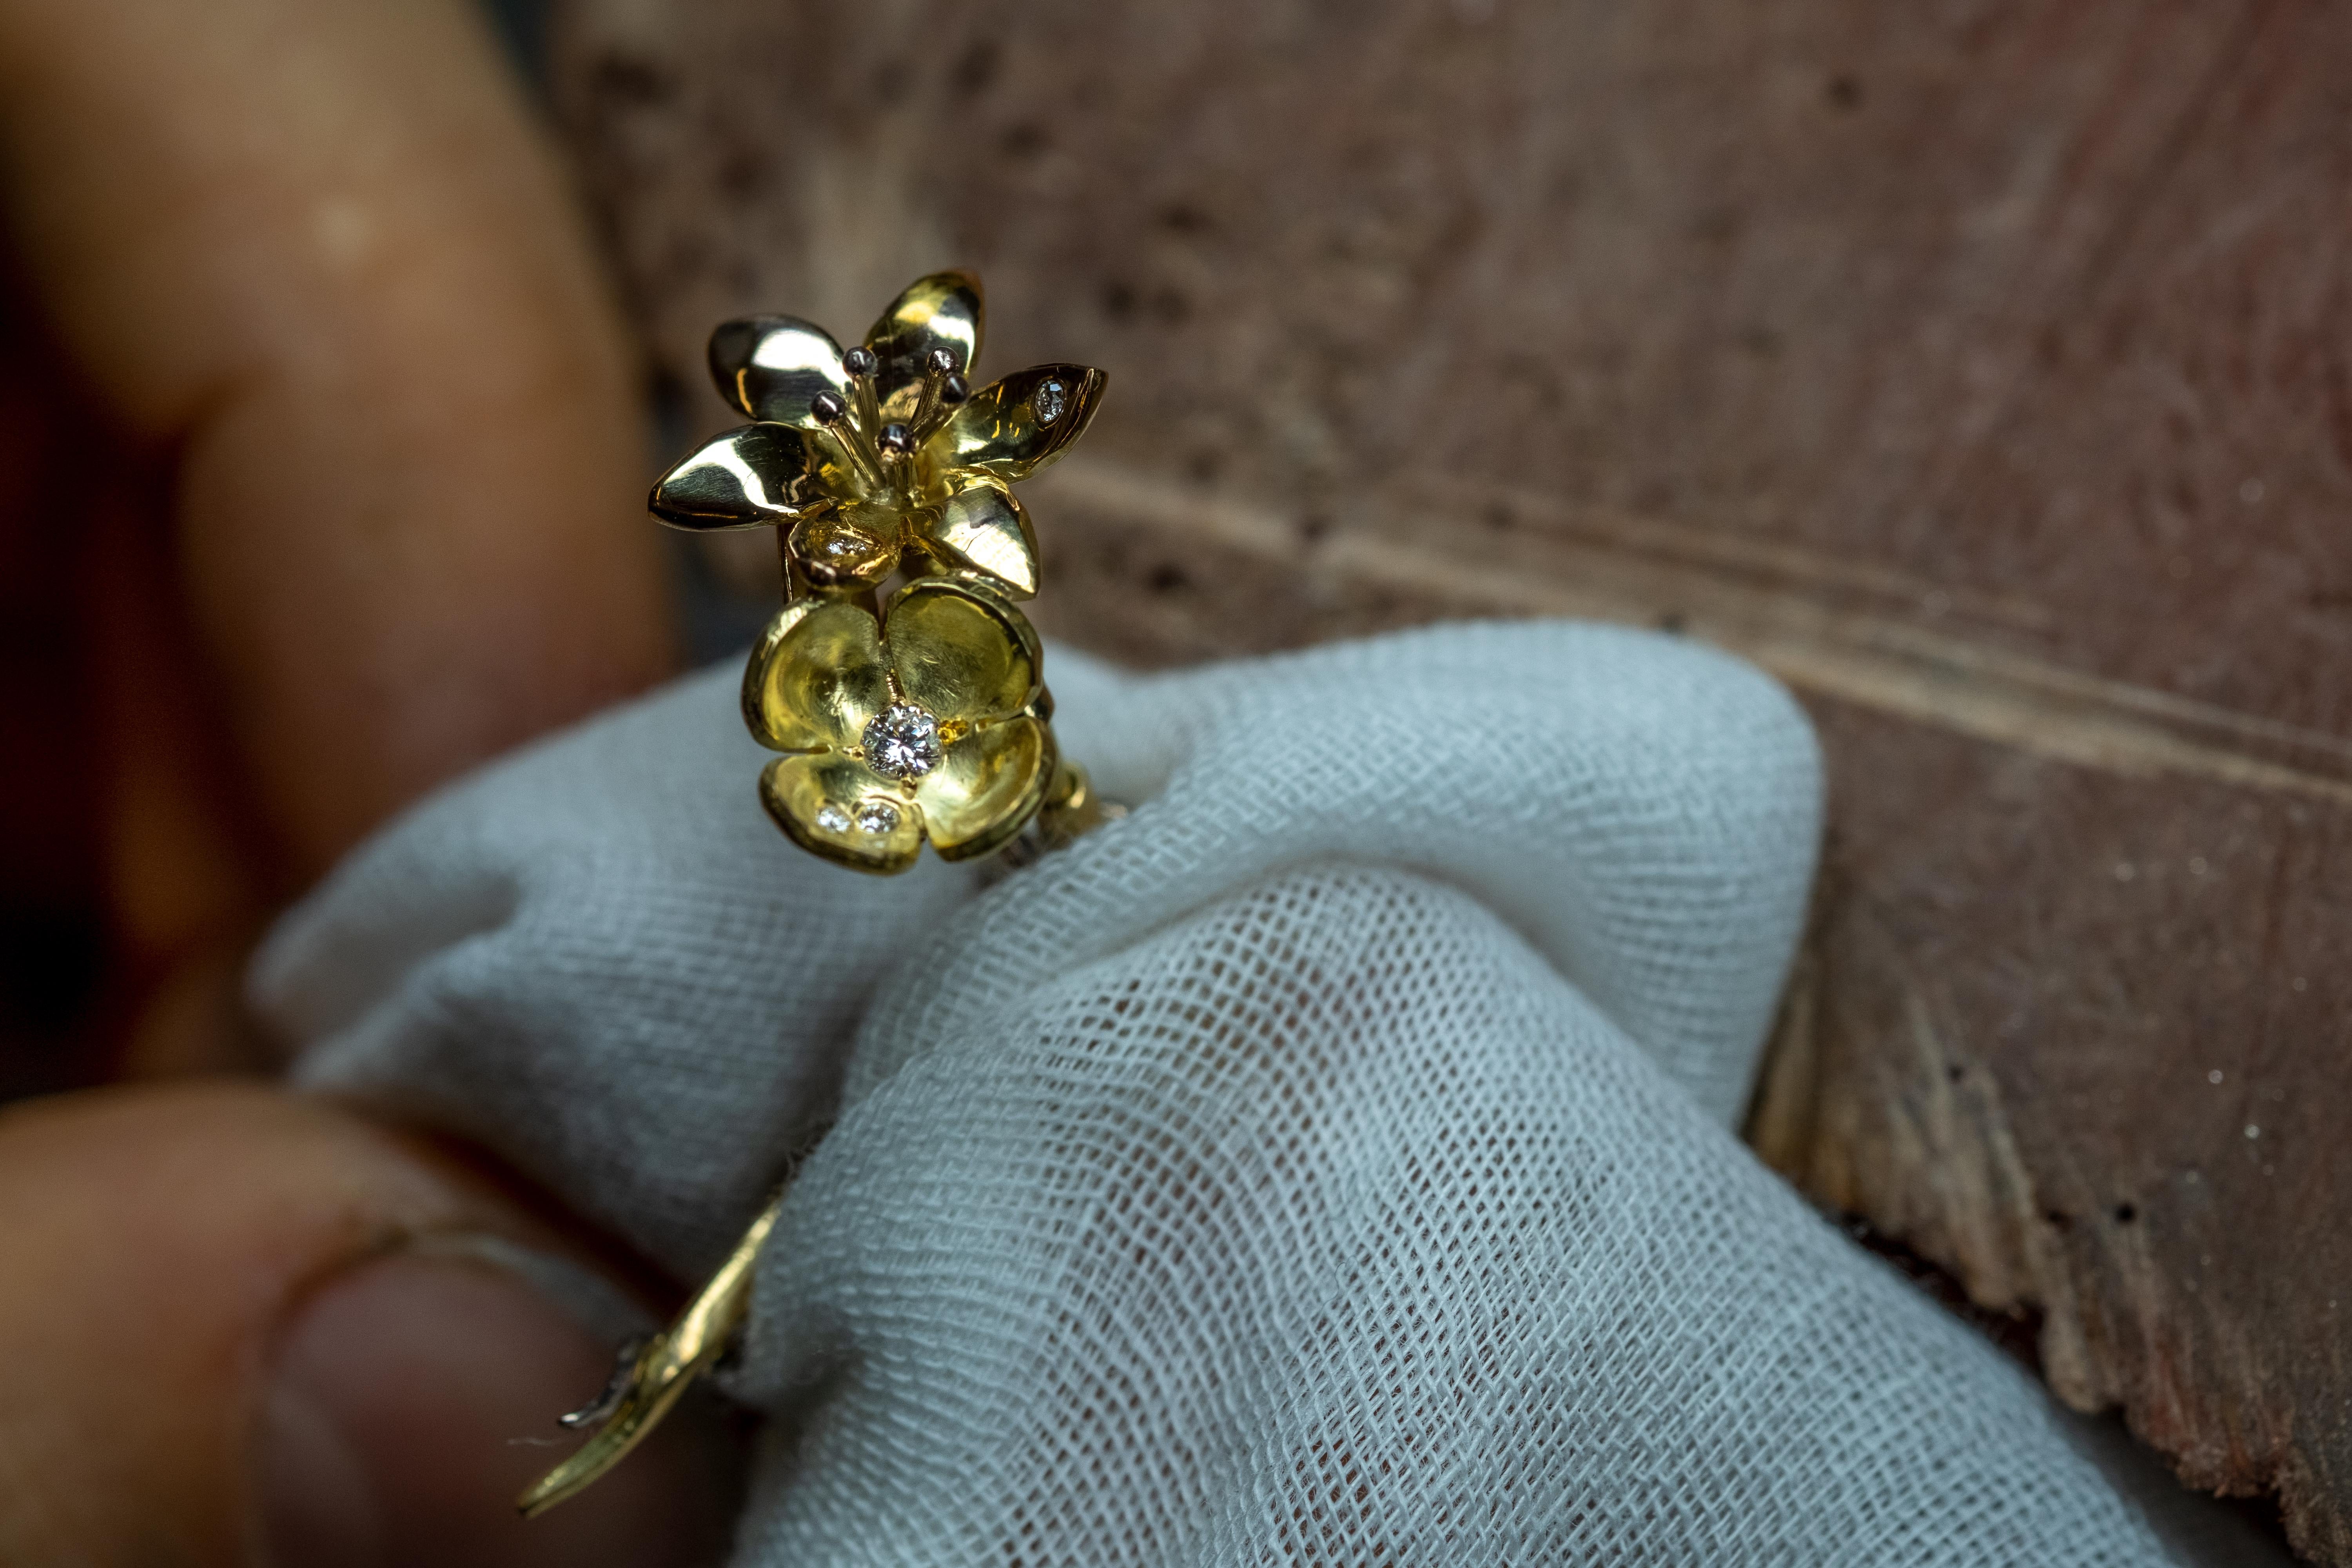 18K Fairmined Gold, Canadamark Diamonds, Handmade, Flower Earring #2 In New Condition For Sale In Rimini, IT